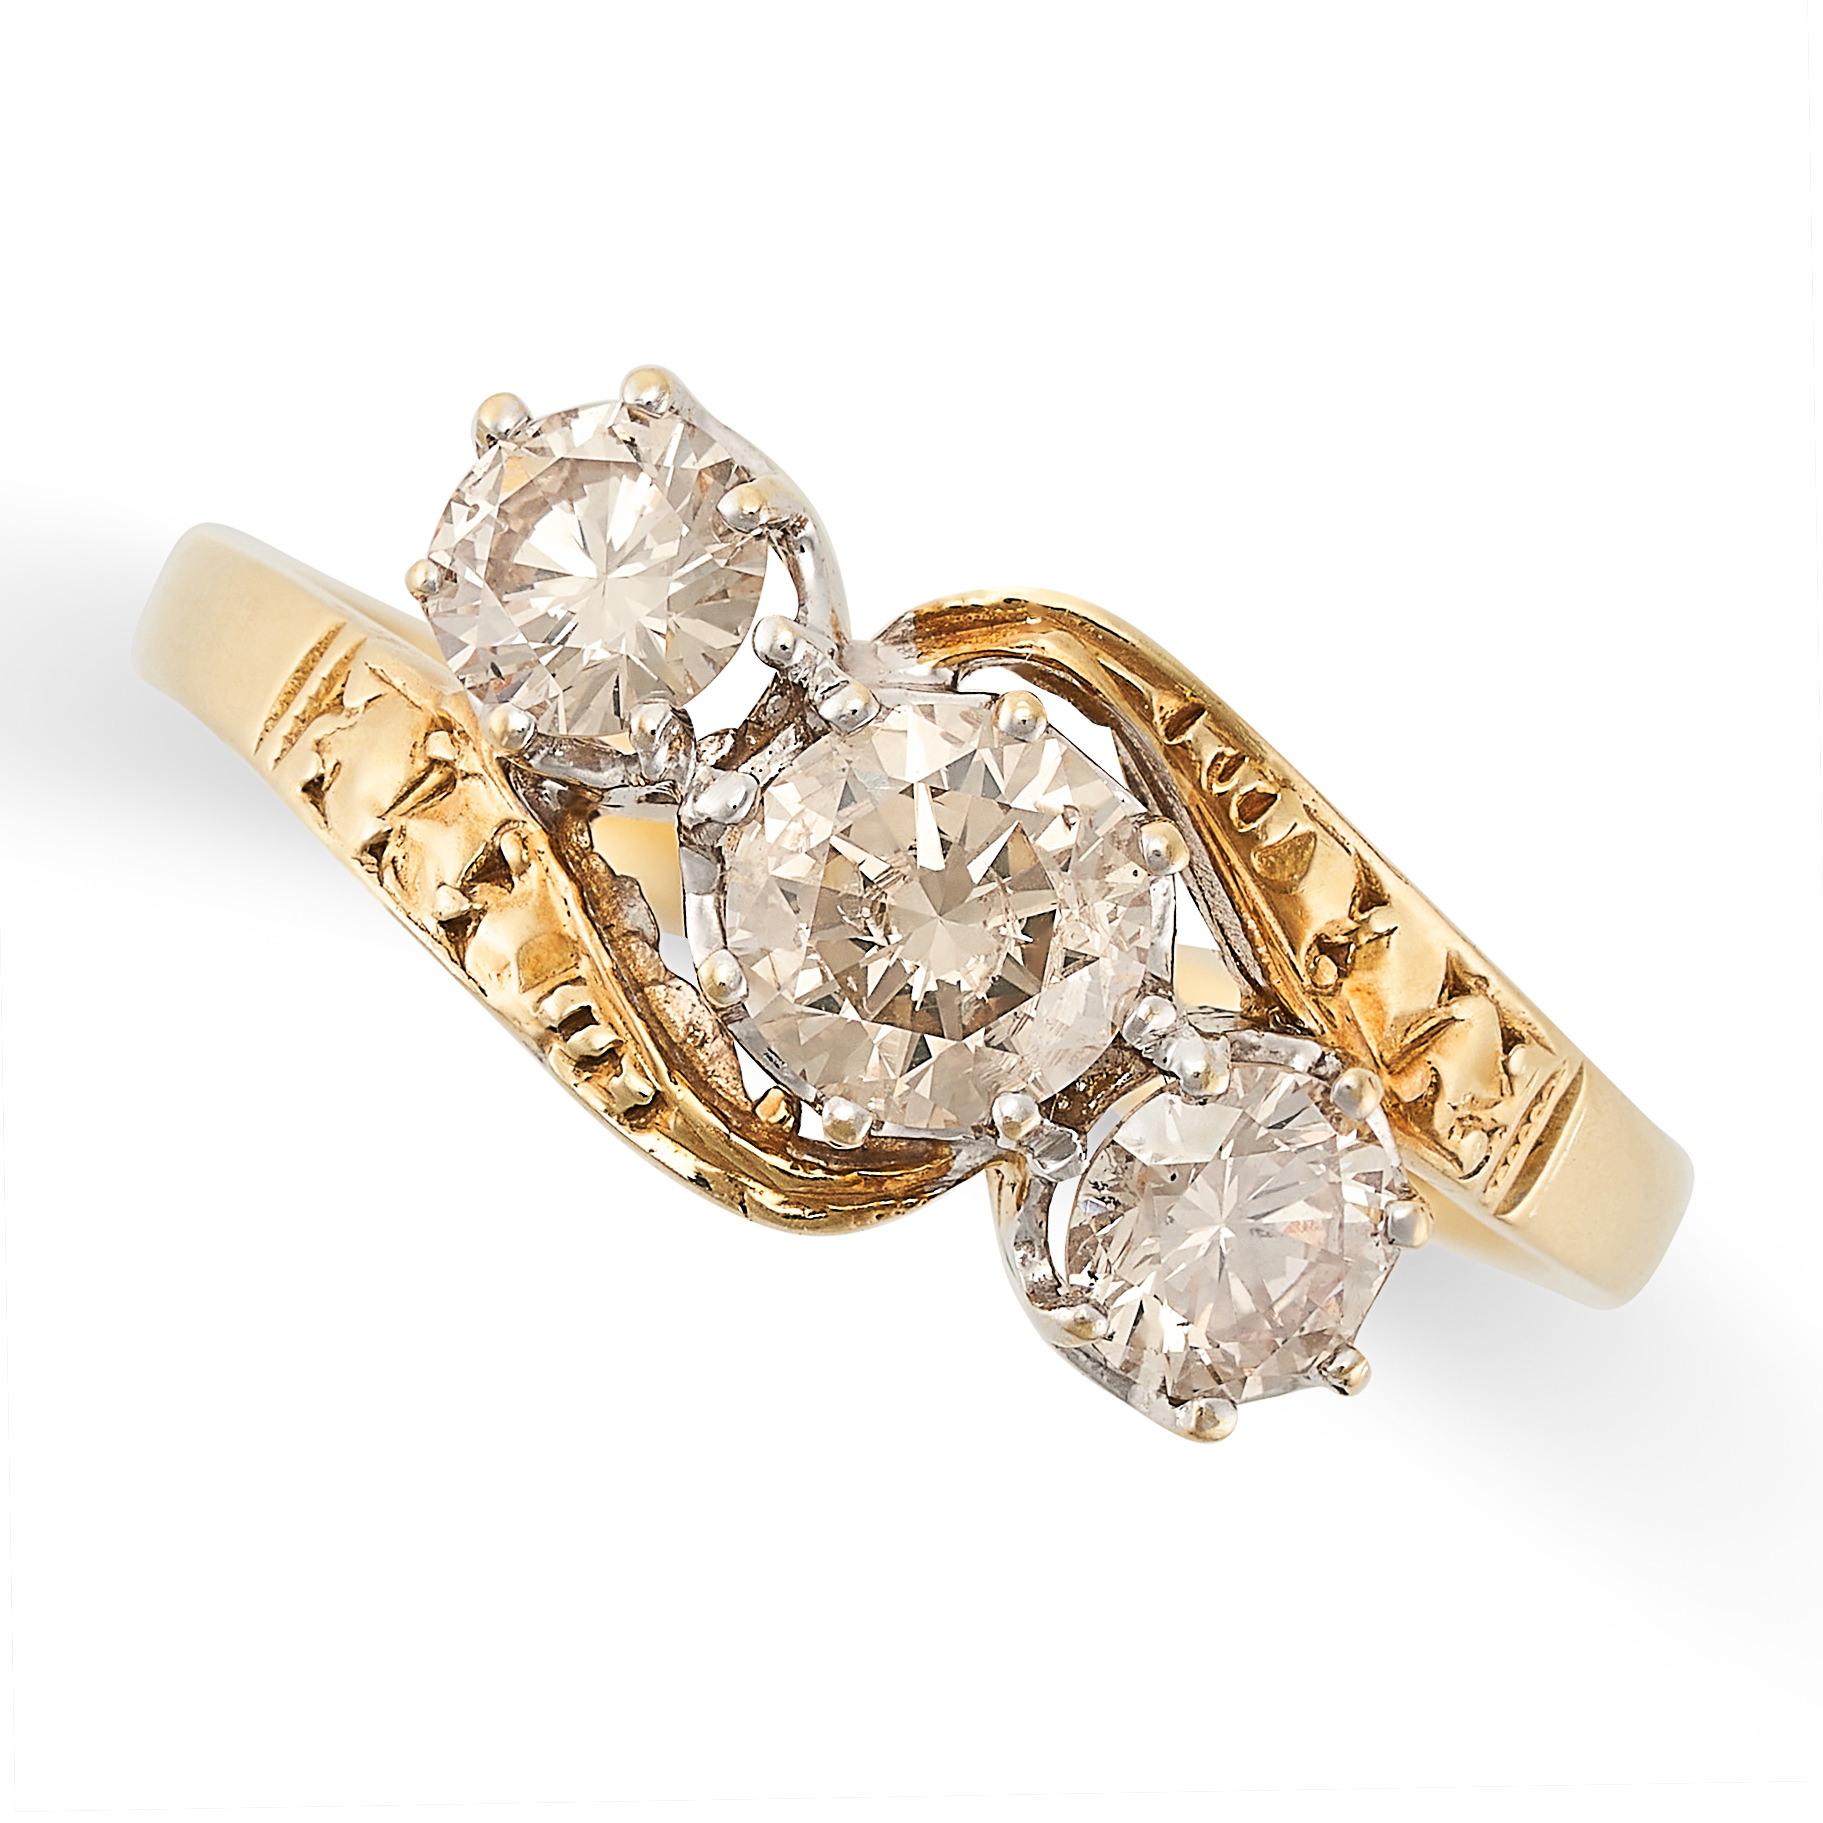 A DIAMOND THREE STONE RING in 18ct yellow gold, set with three round brilliant cut diamonds all